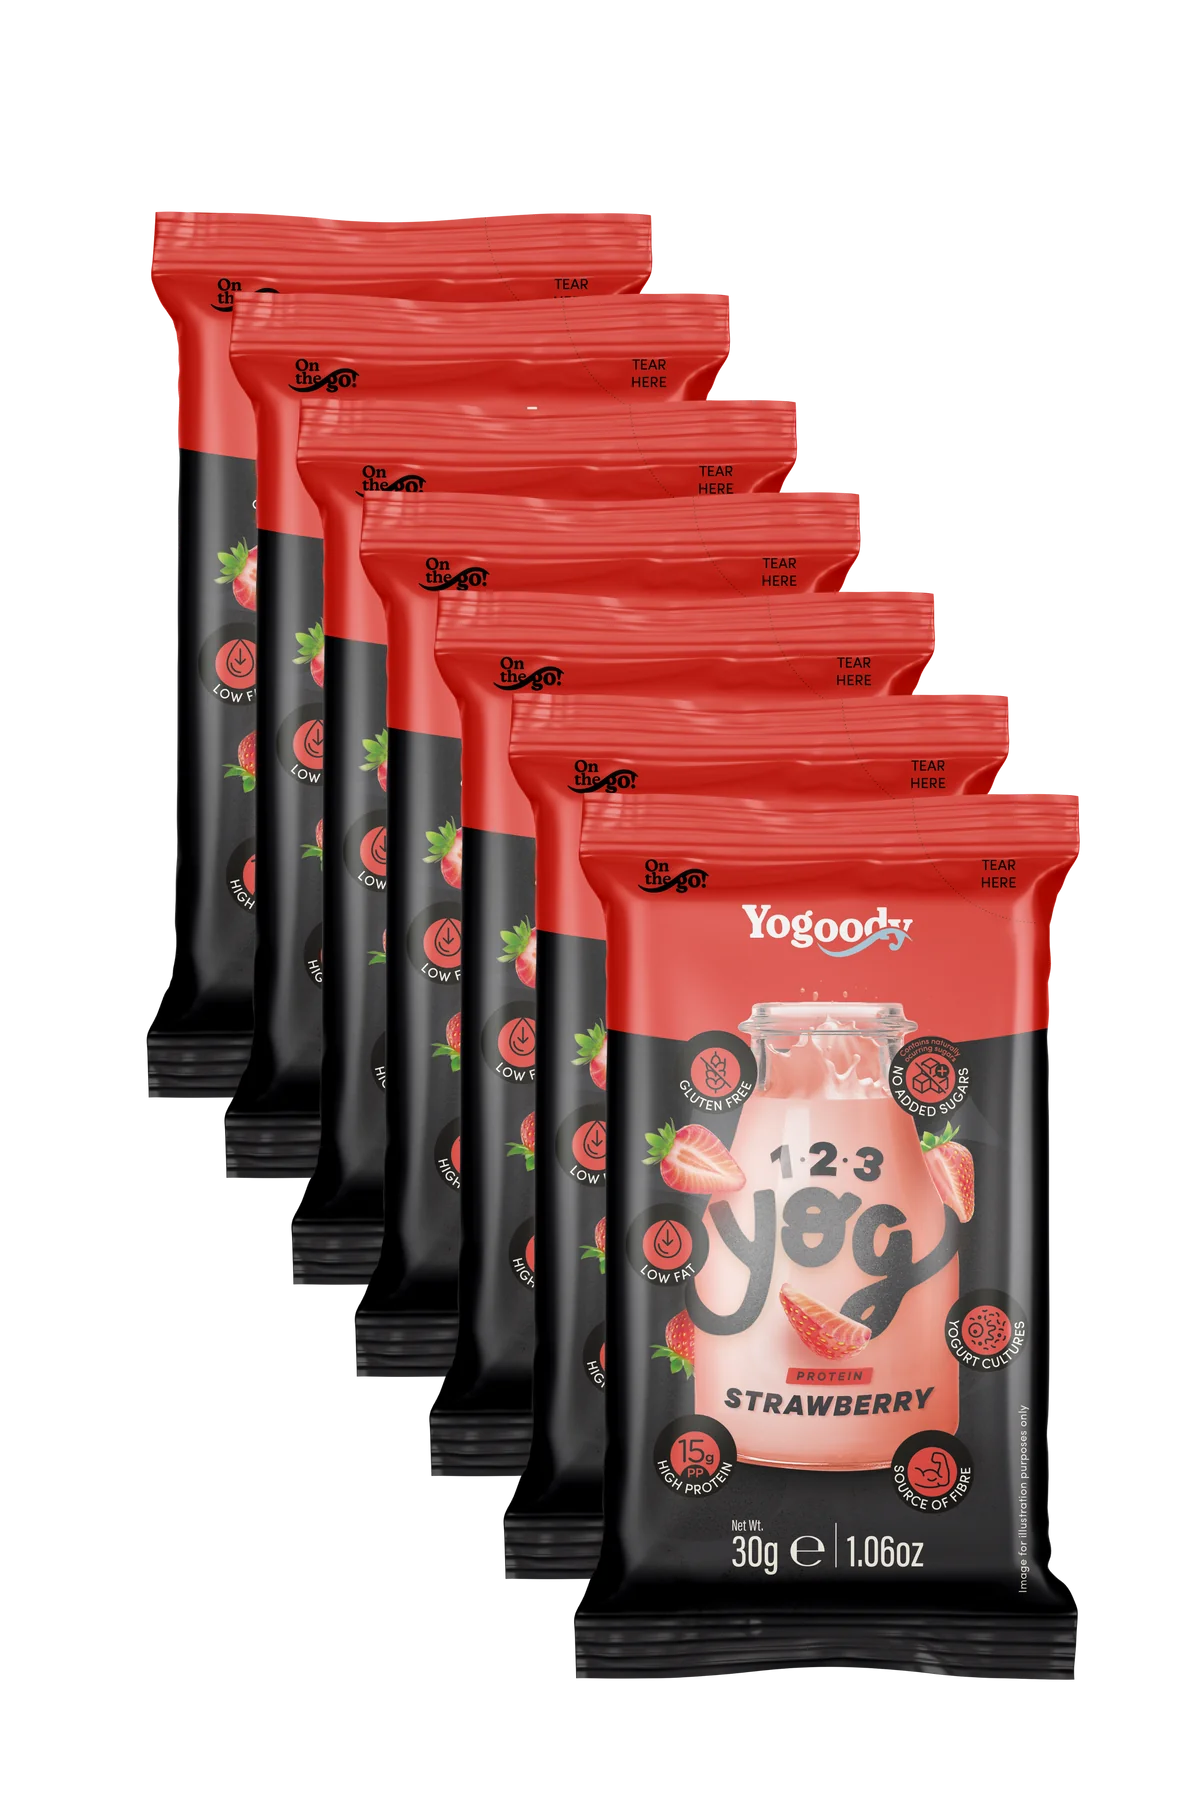 1.2.3. YOG Protein Strawberry Flavoured Shake - 7 x 30g sachets